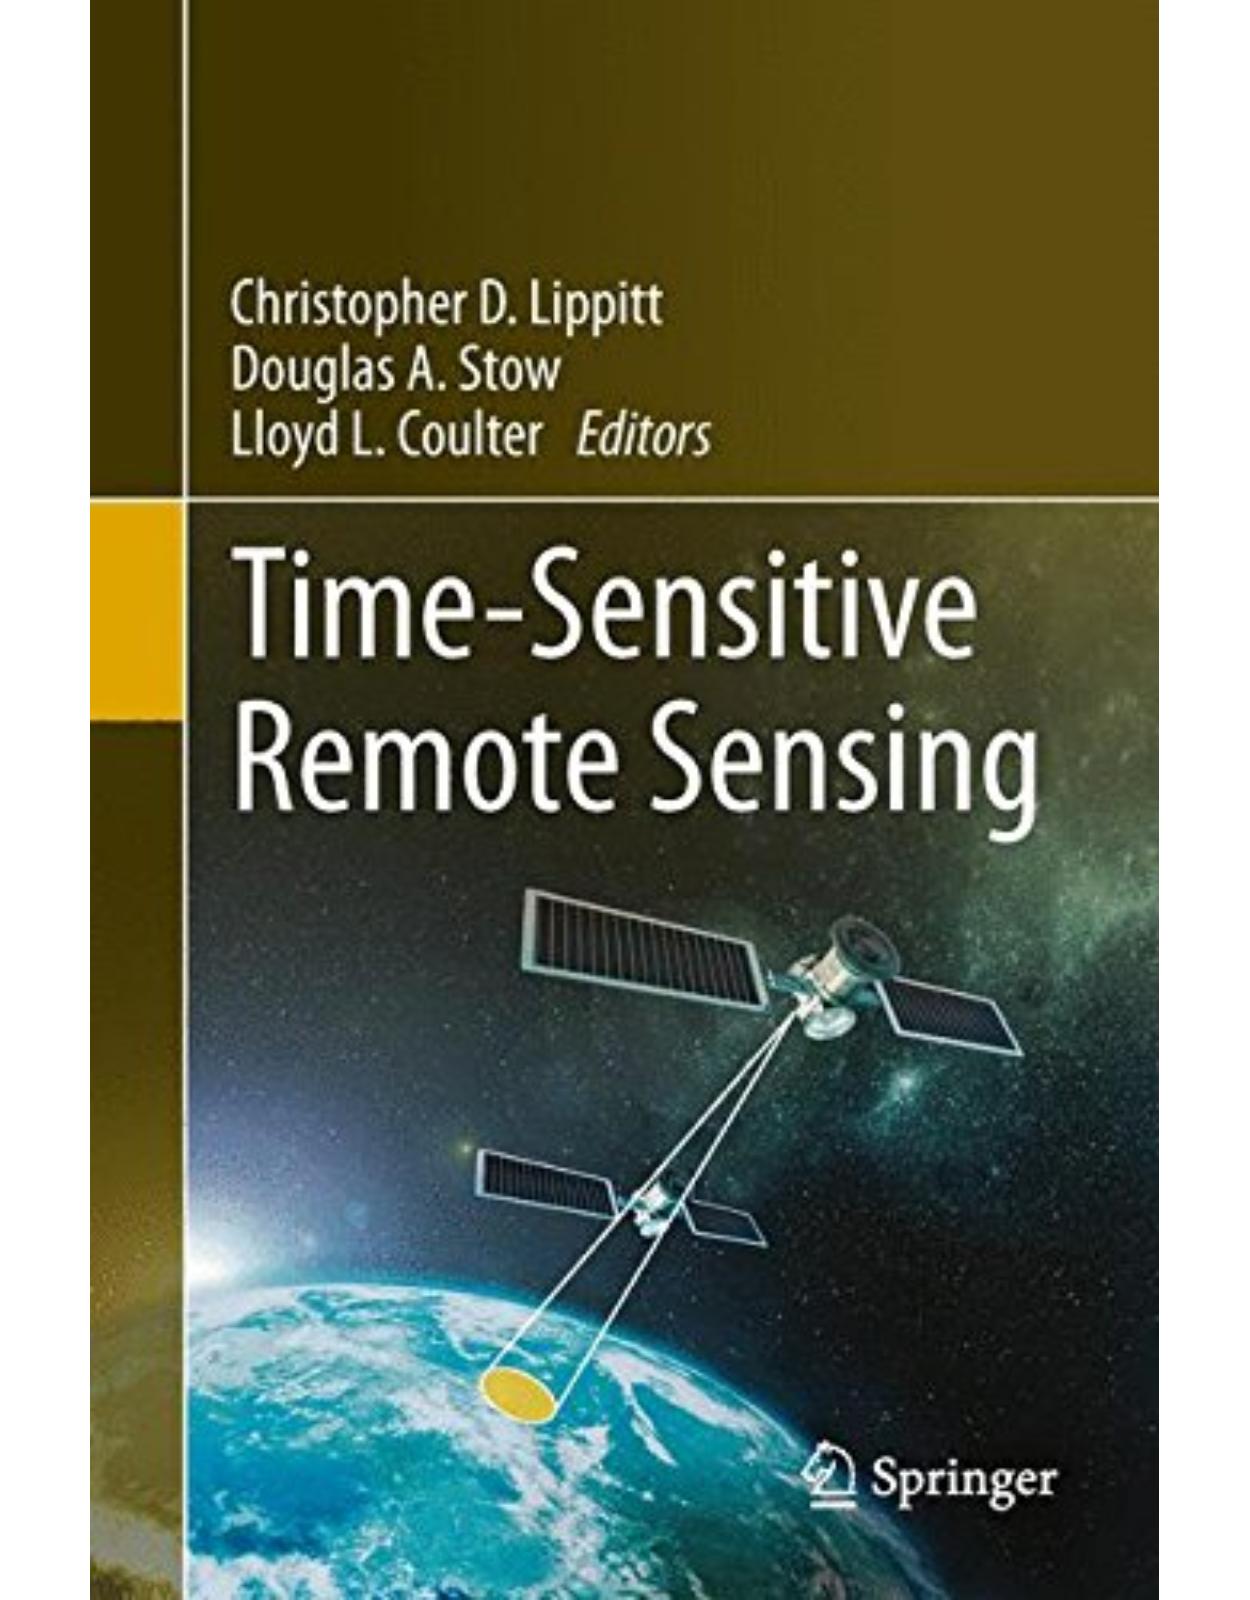 Time-Sensitive Remote Sensing